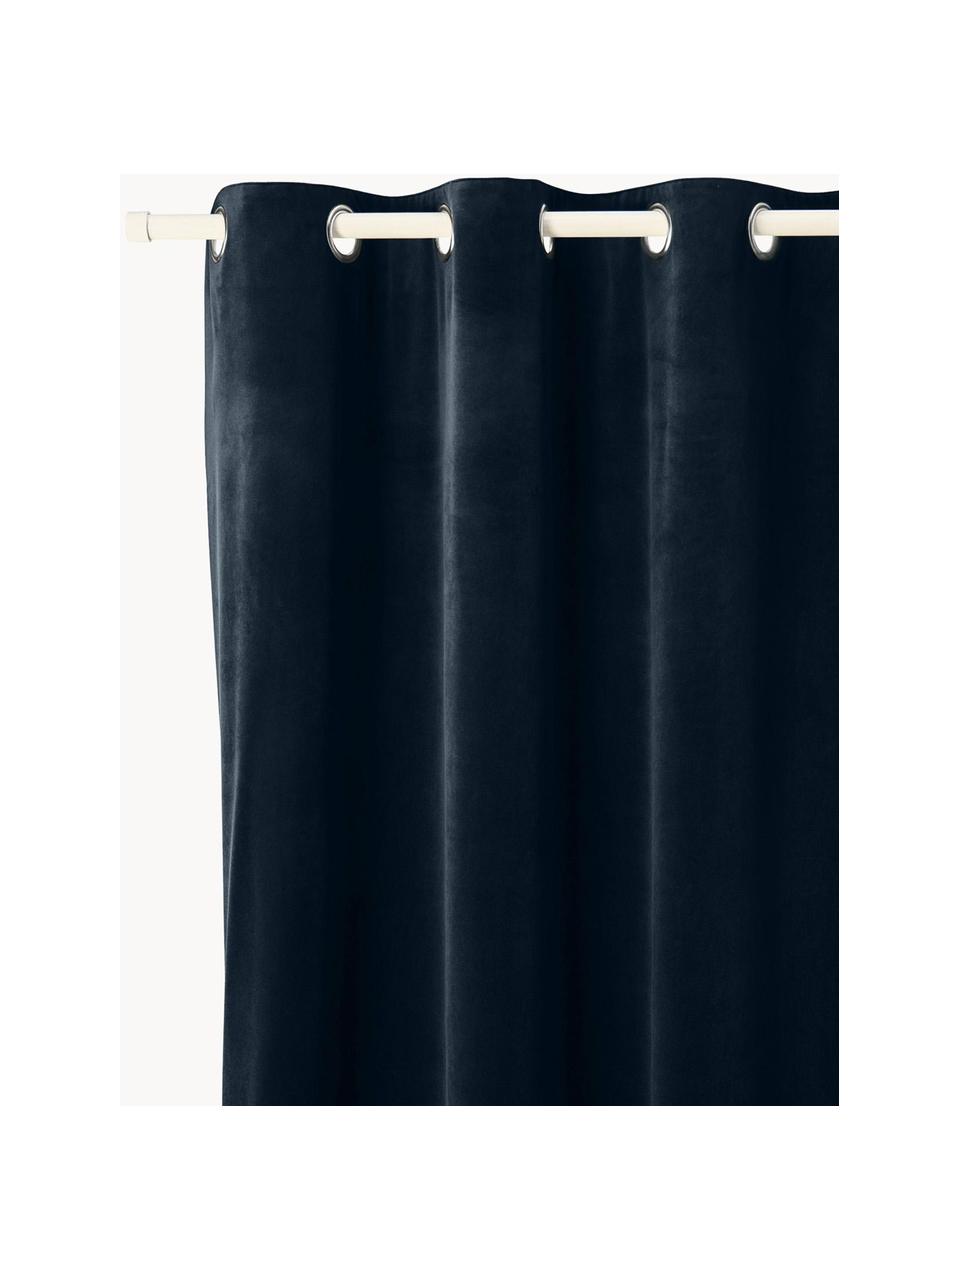 Abdunkelnder Samt-Vorhang Rush mit Ösen, 2 Stück, 100 % Polyester (recycled), GRS-zertifiziert, Dunkelblau, B 135 x L 260 cm